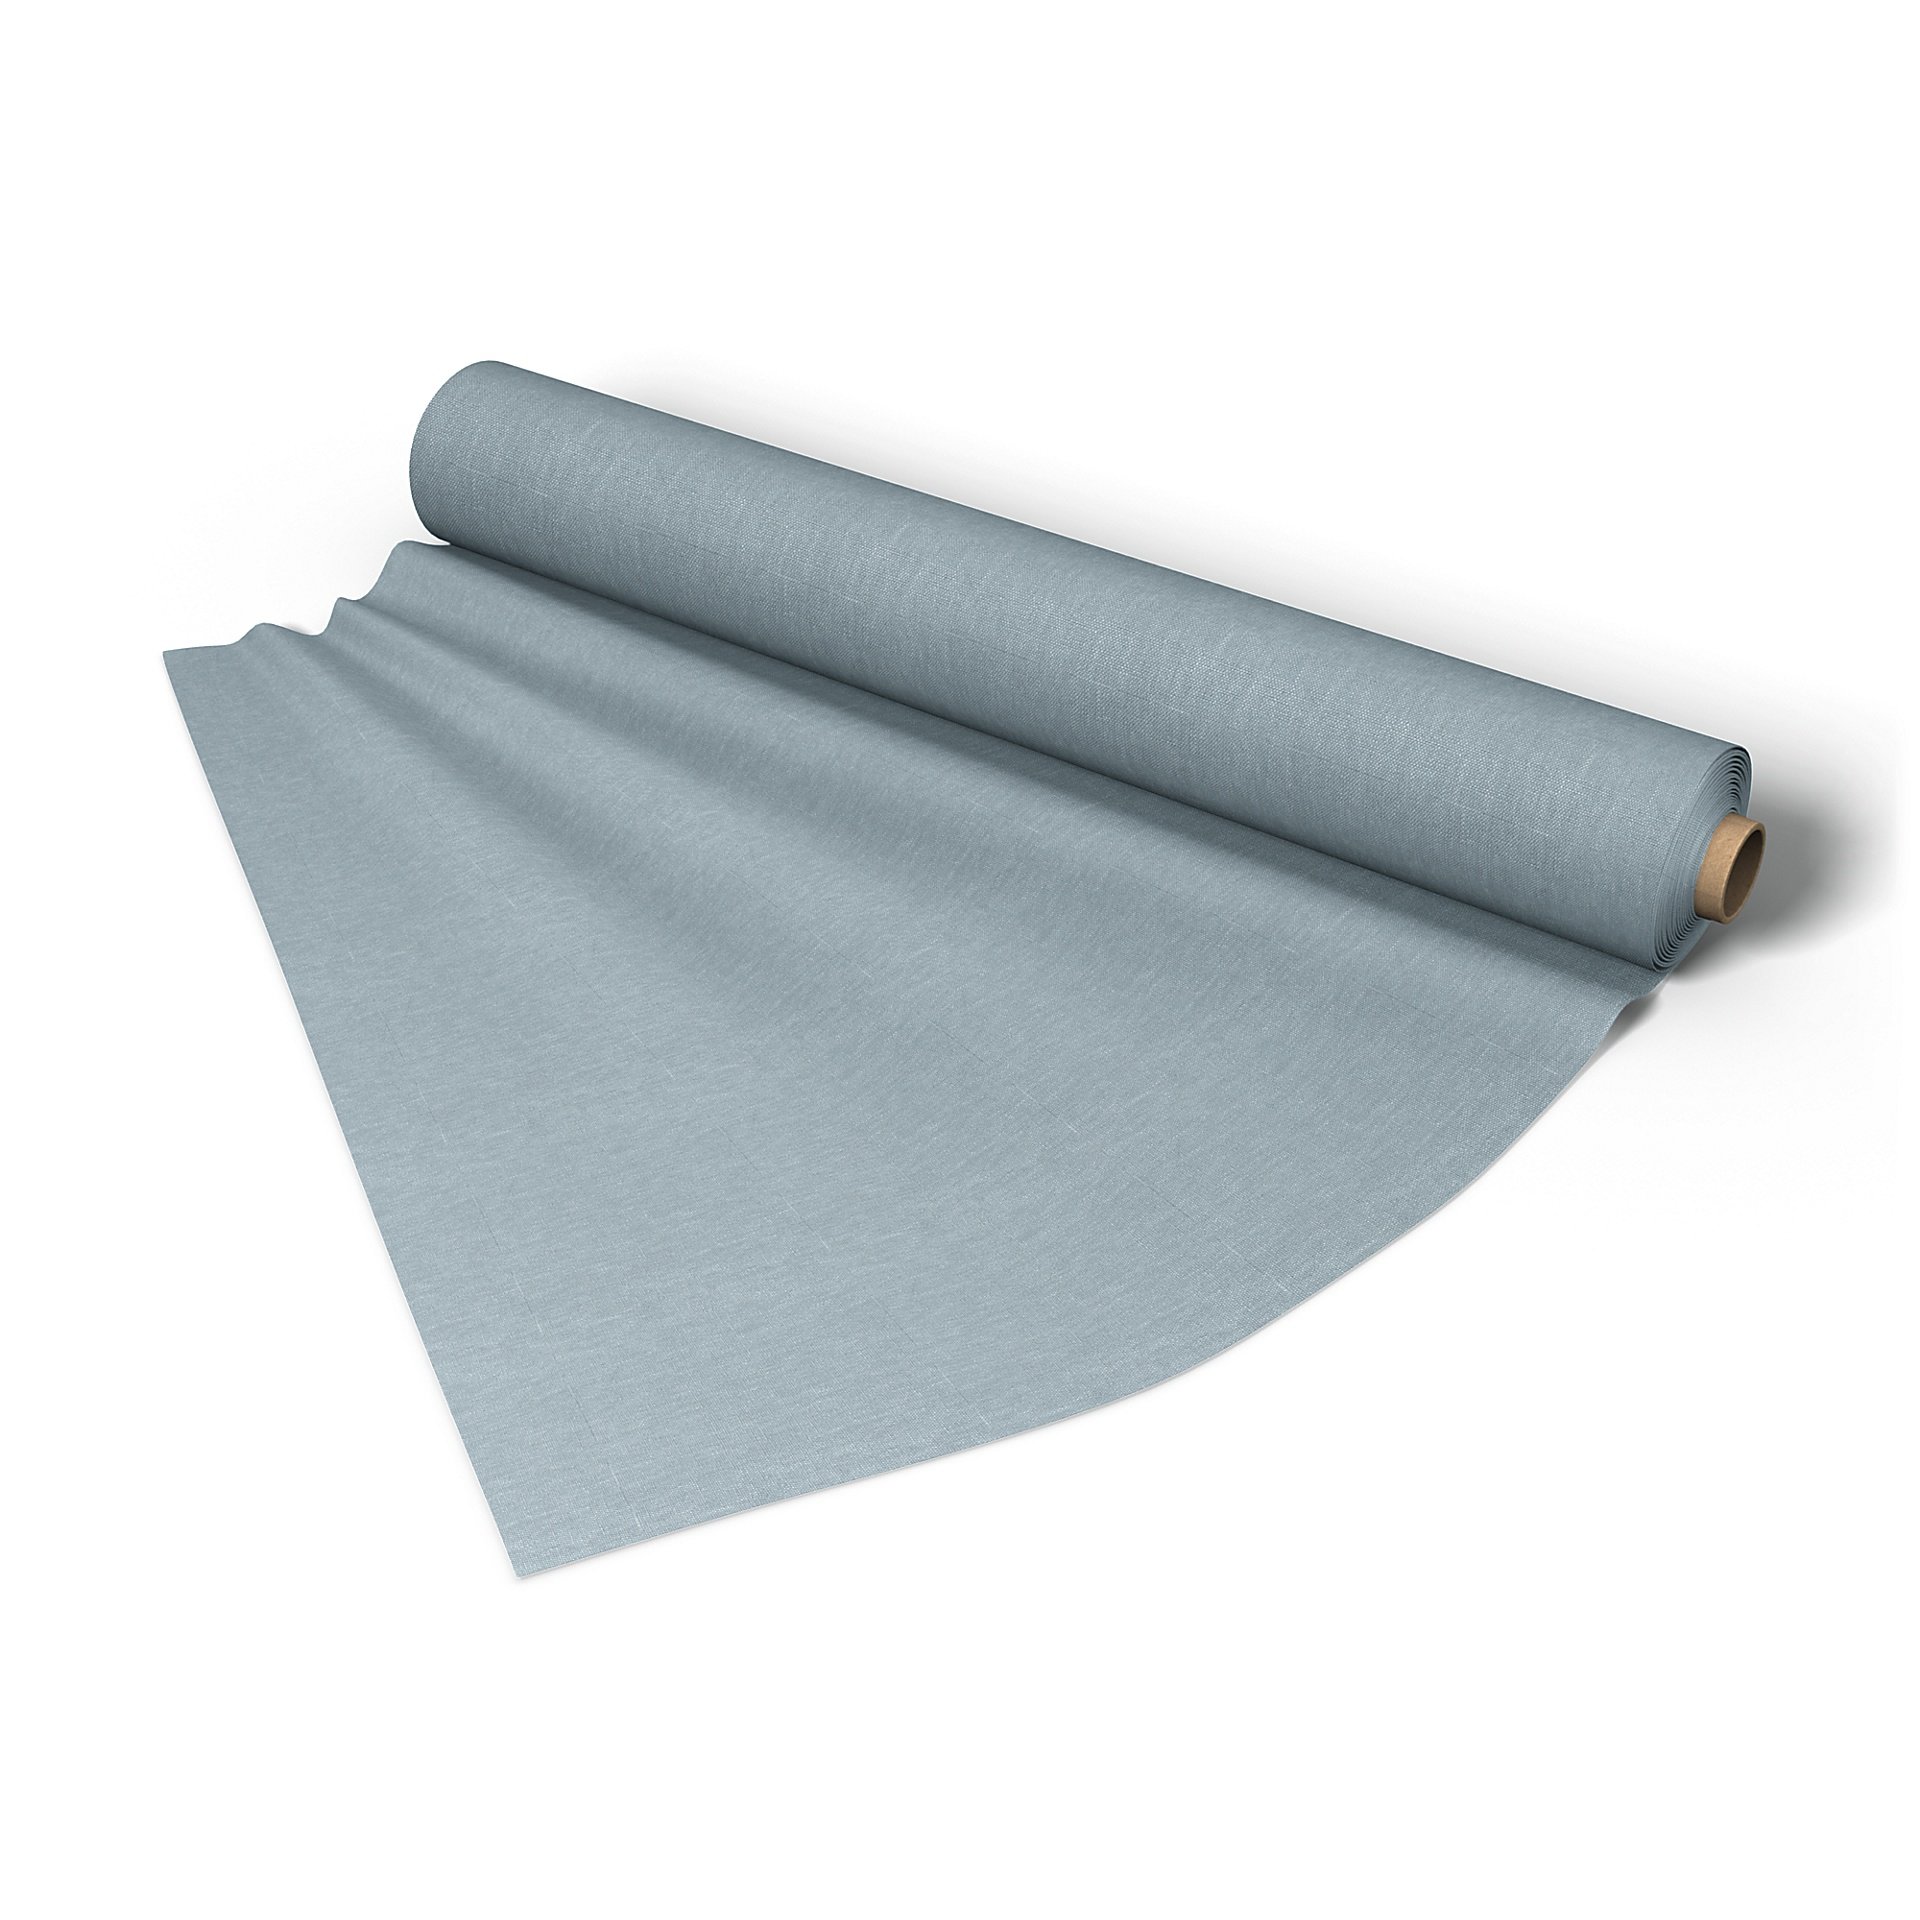 Fabric per metre, Dusty Blue, Linen - Bemz